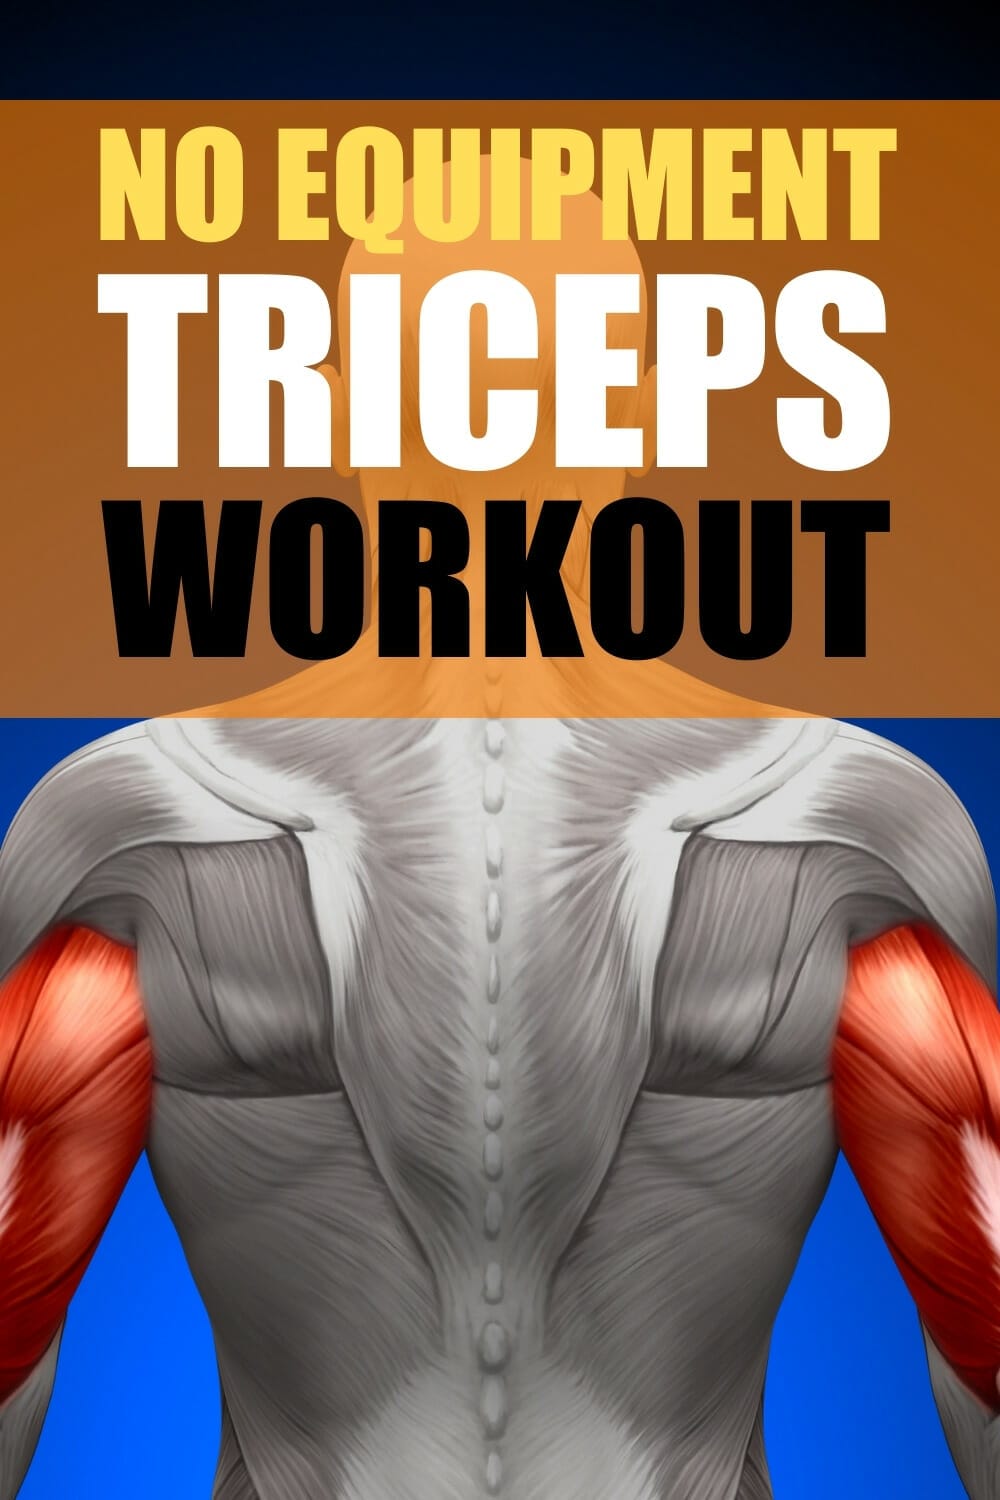 effective triceps exercises no equipment pinterest